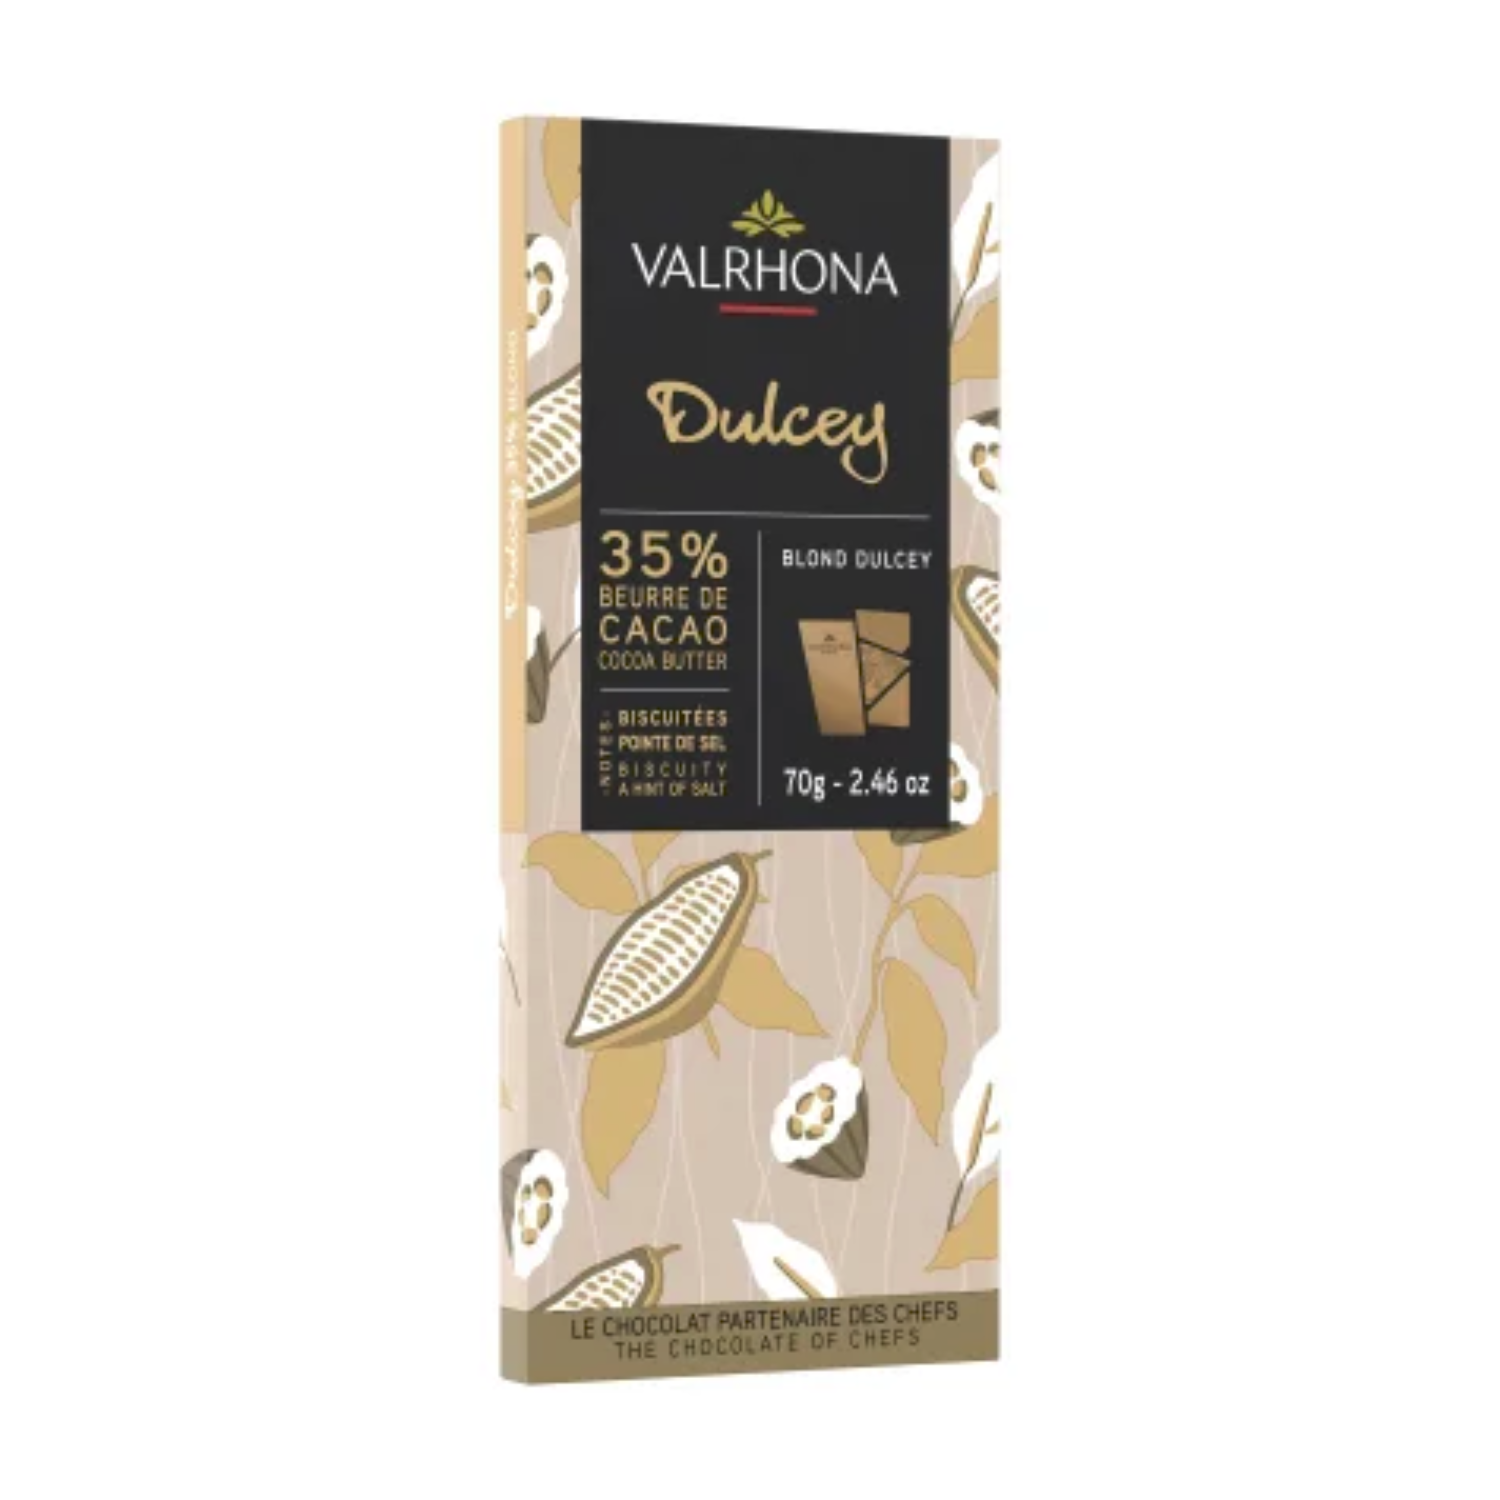 Tablette de chocolat Dulcey 35% - Valrhona - Terre/Chocolats - Valrhona -  Les Vins Brunin-Guillier